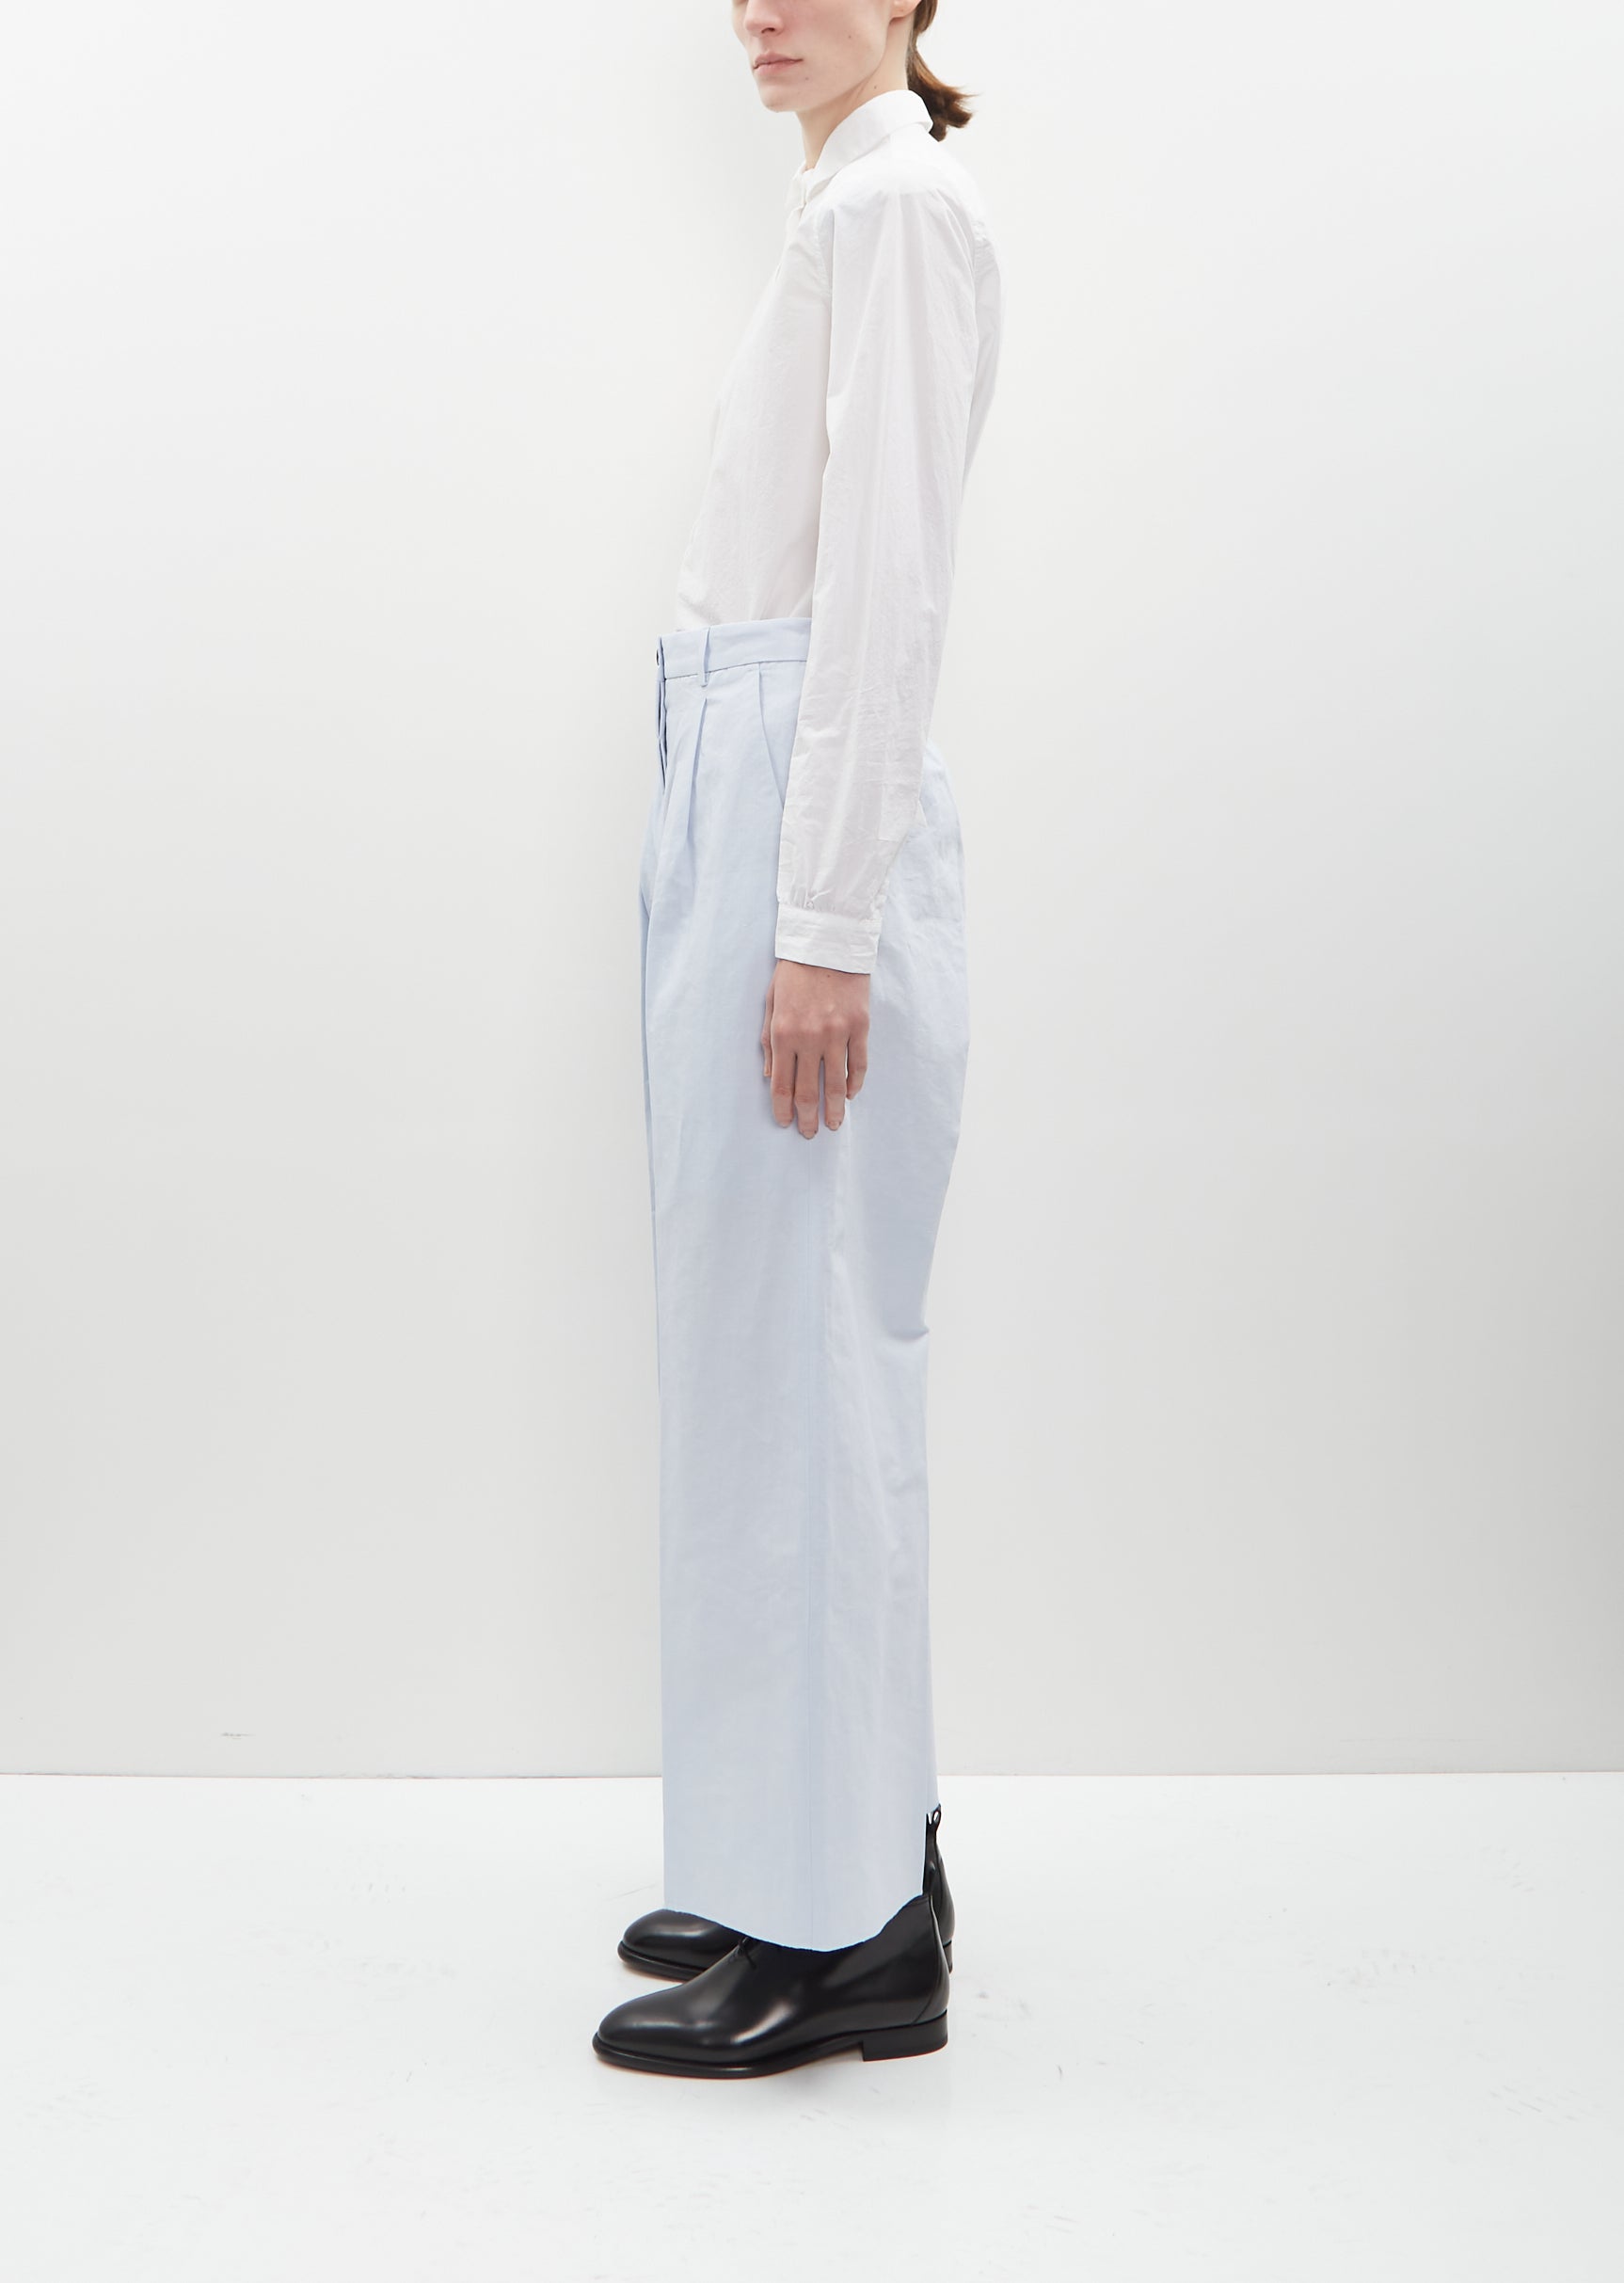 Buy Linen Pants Women Cotton Linen Elastic Waist Drawstring Long Casual  Wide Leg Pants at Amazon.in